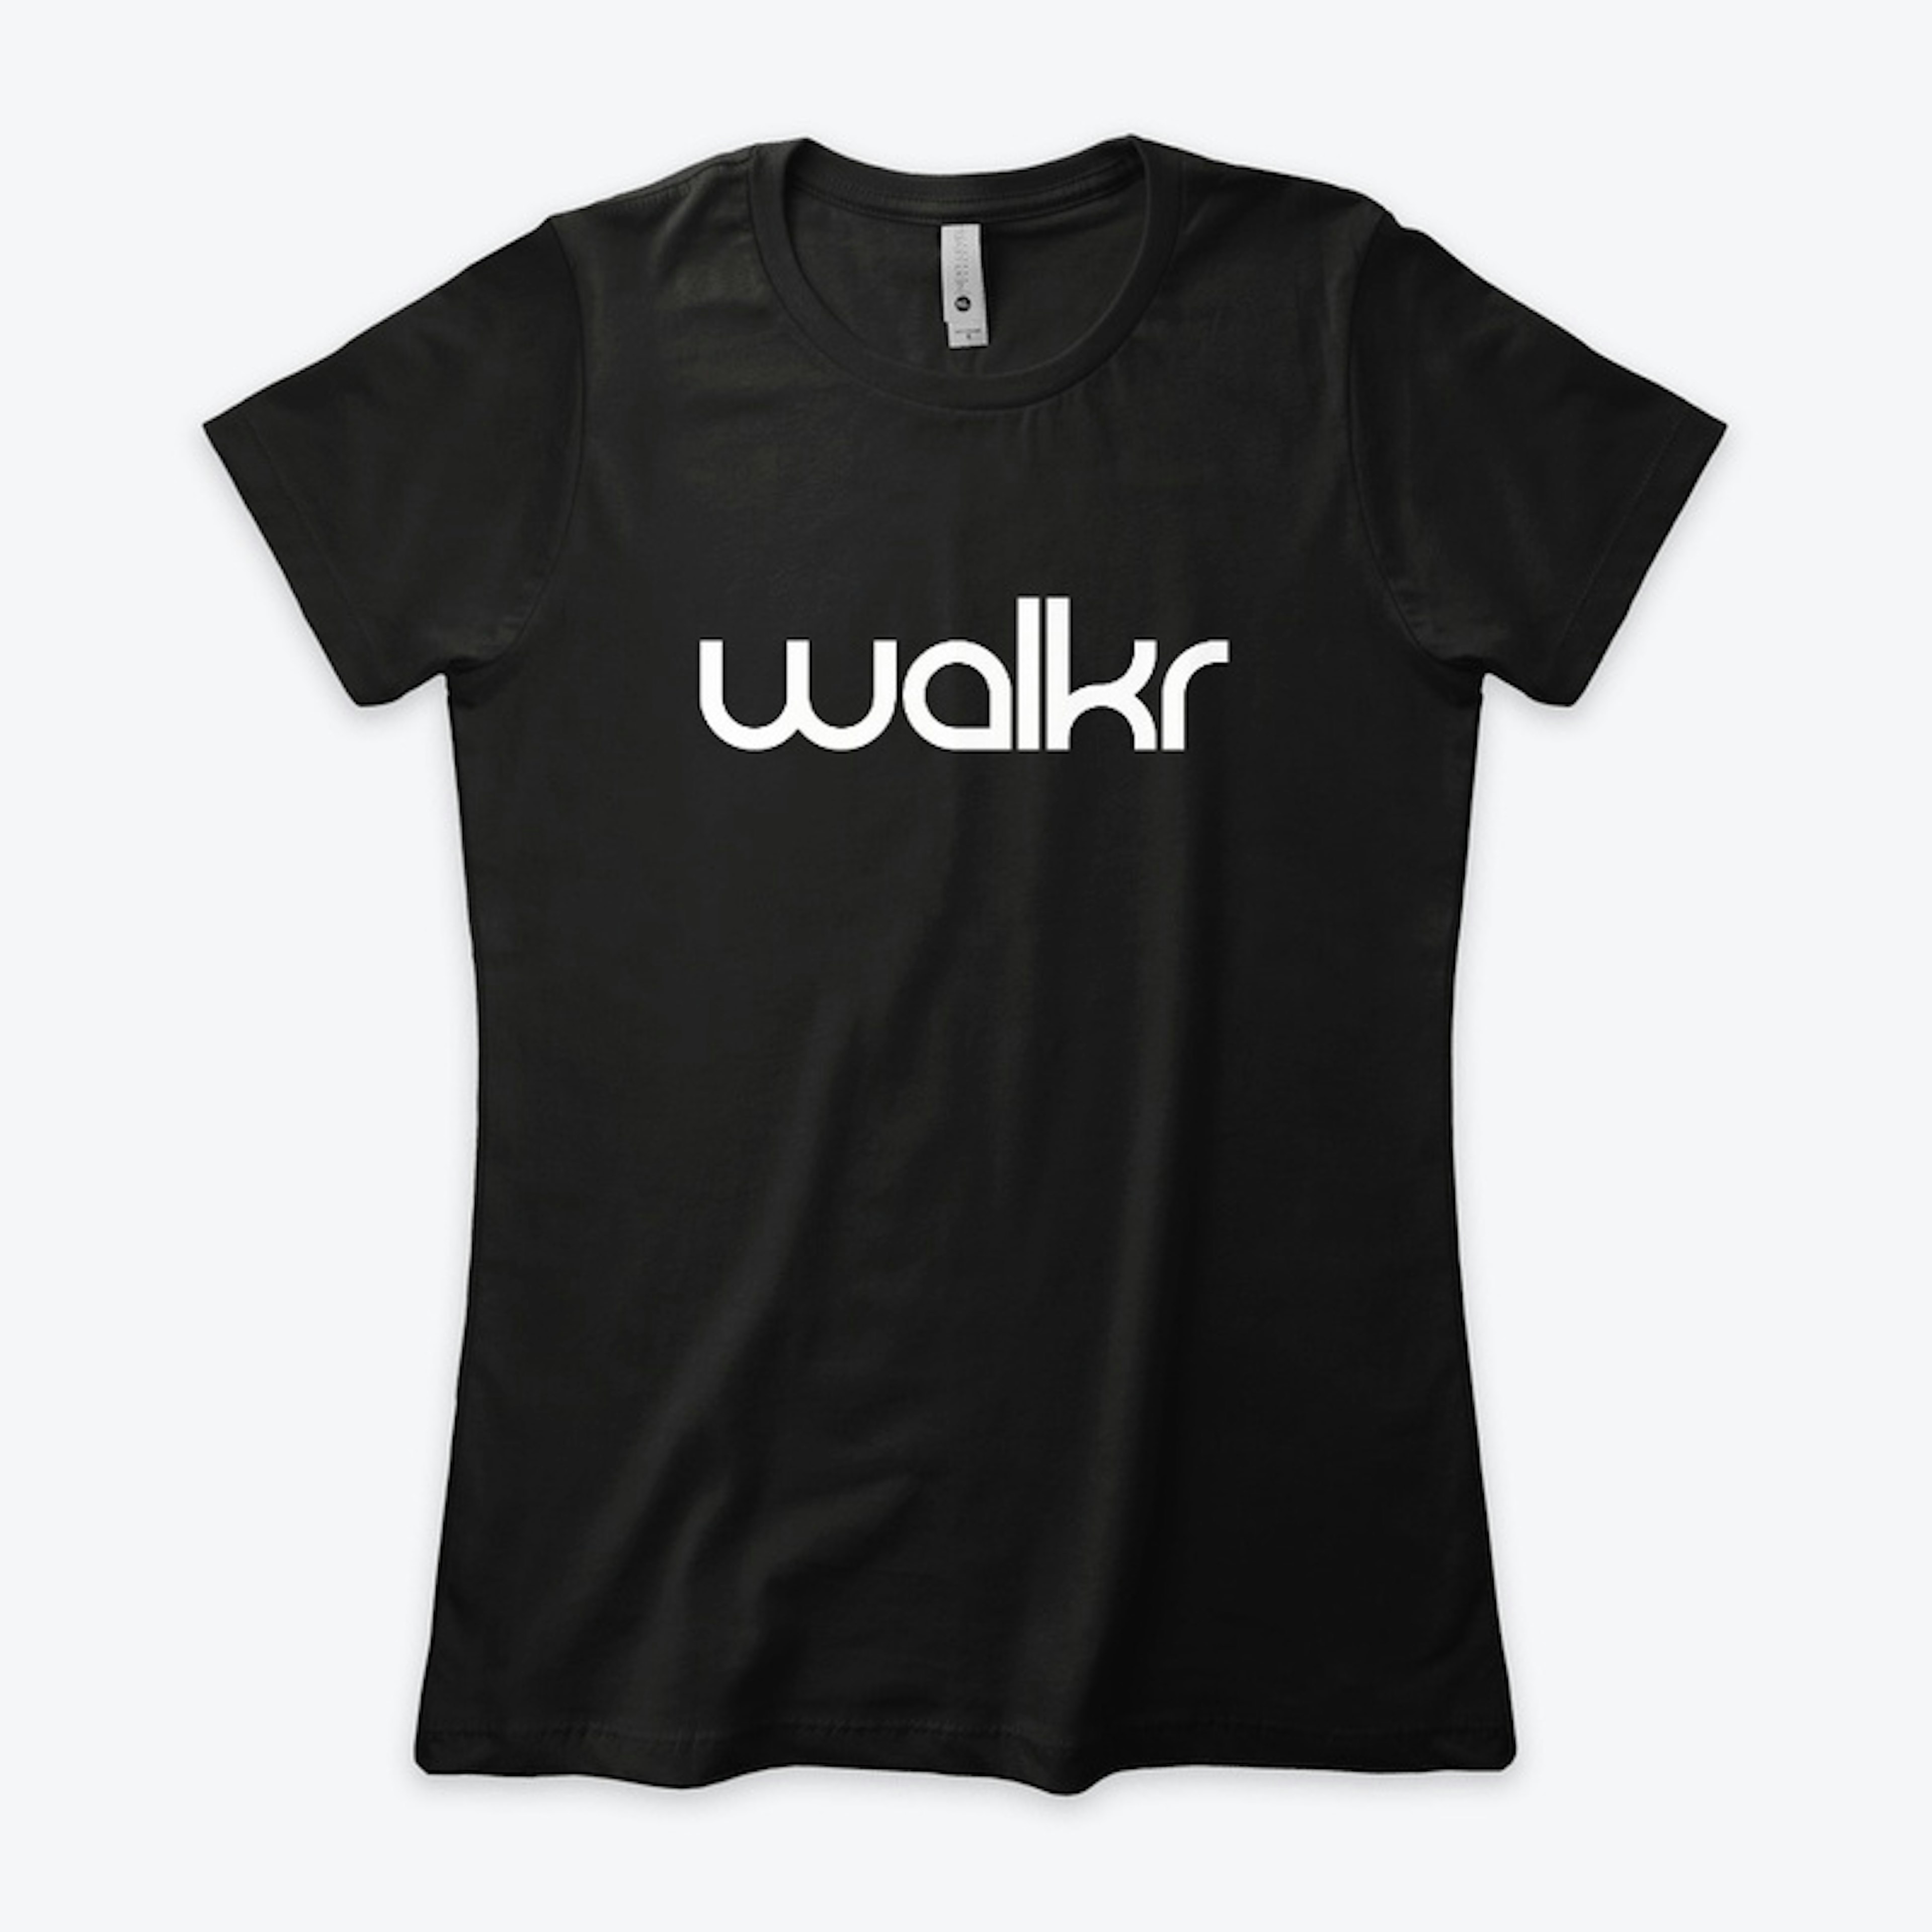 walkr1